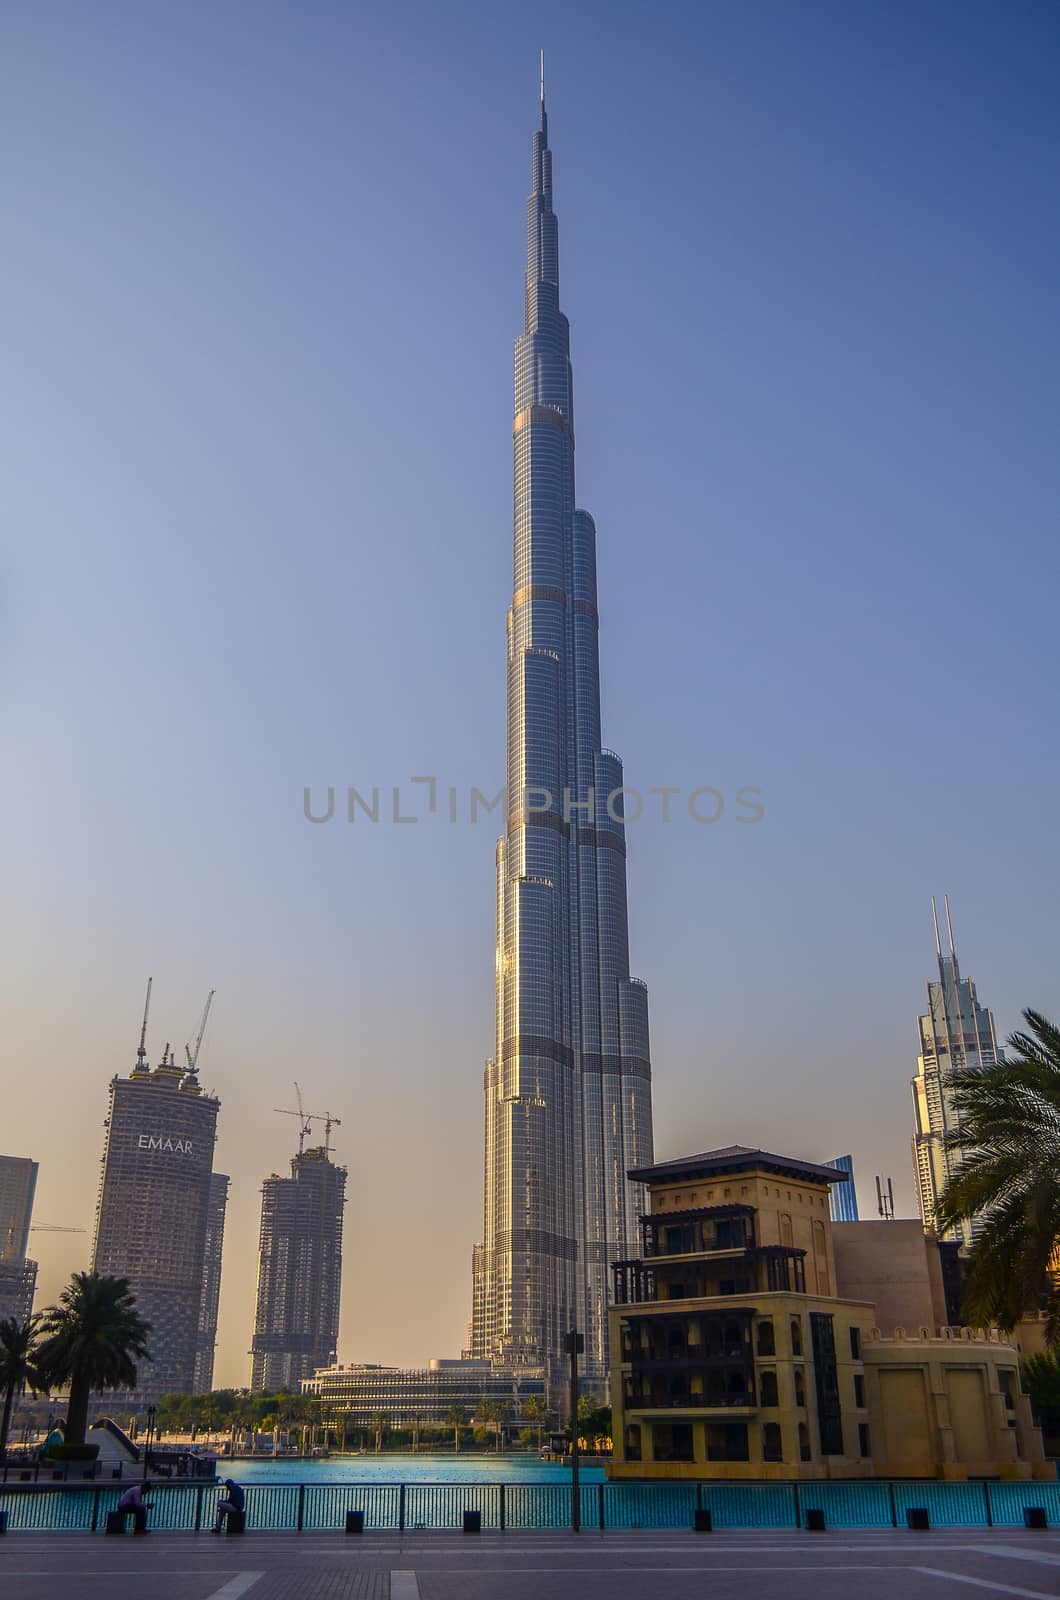 View of Burj Khalifa - the tallest building in the world. Dubai, UAE